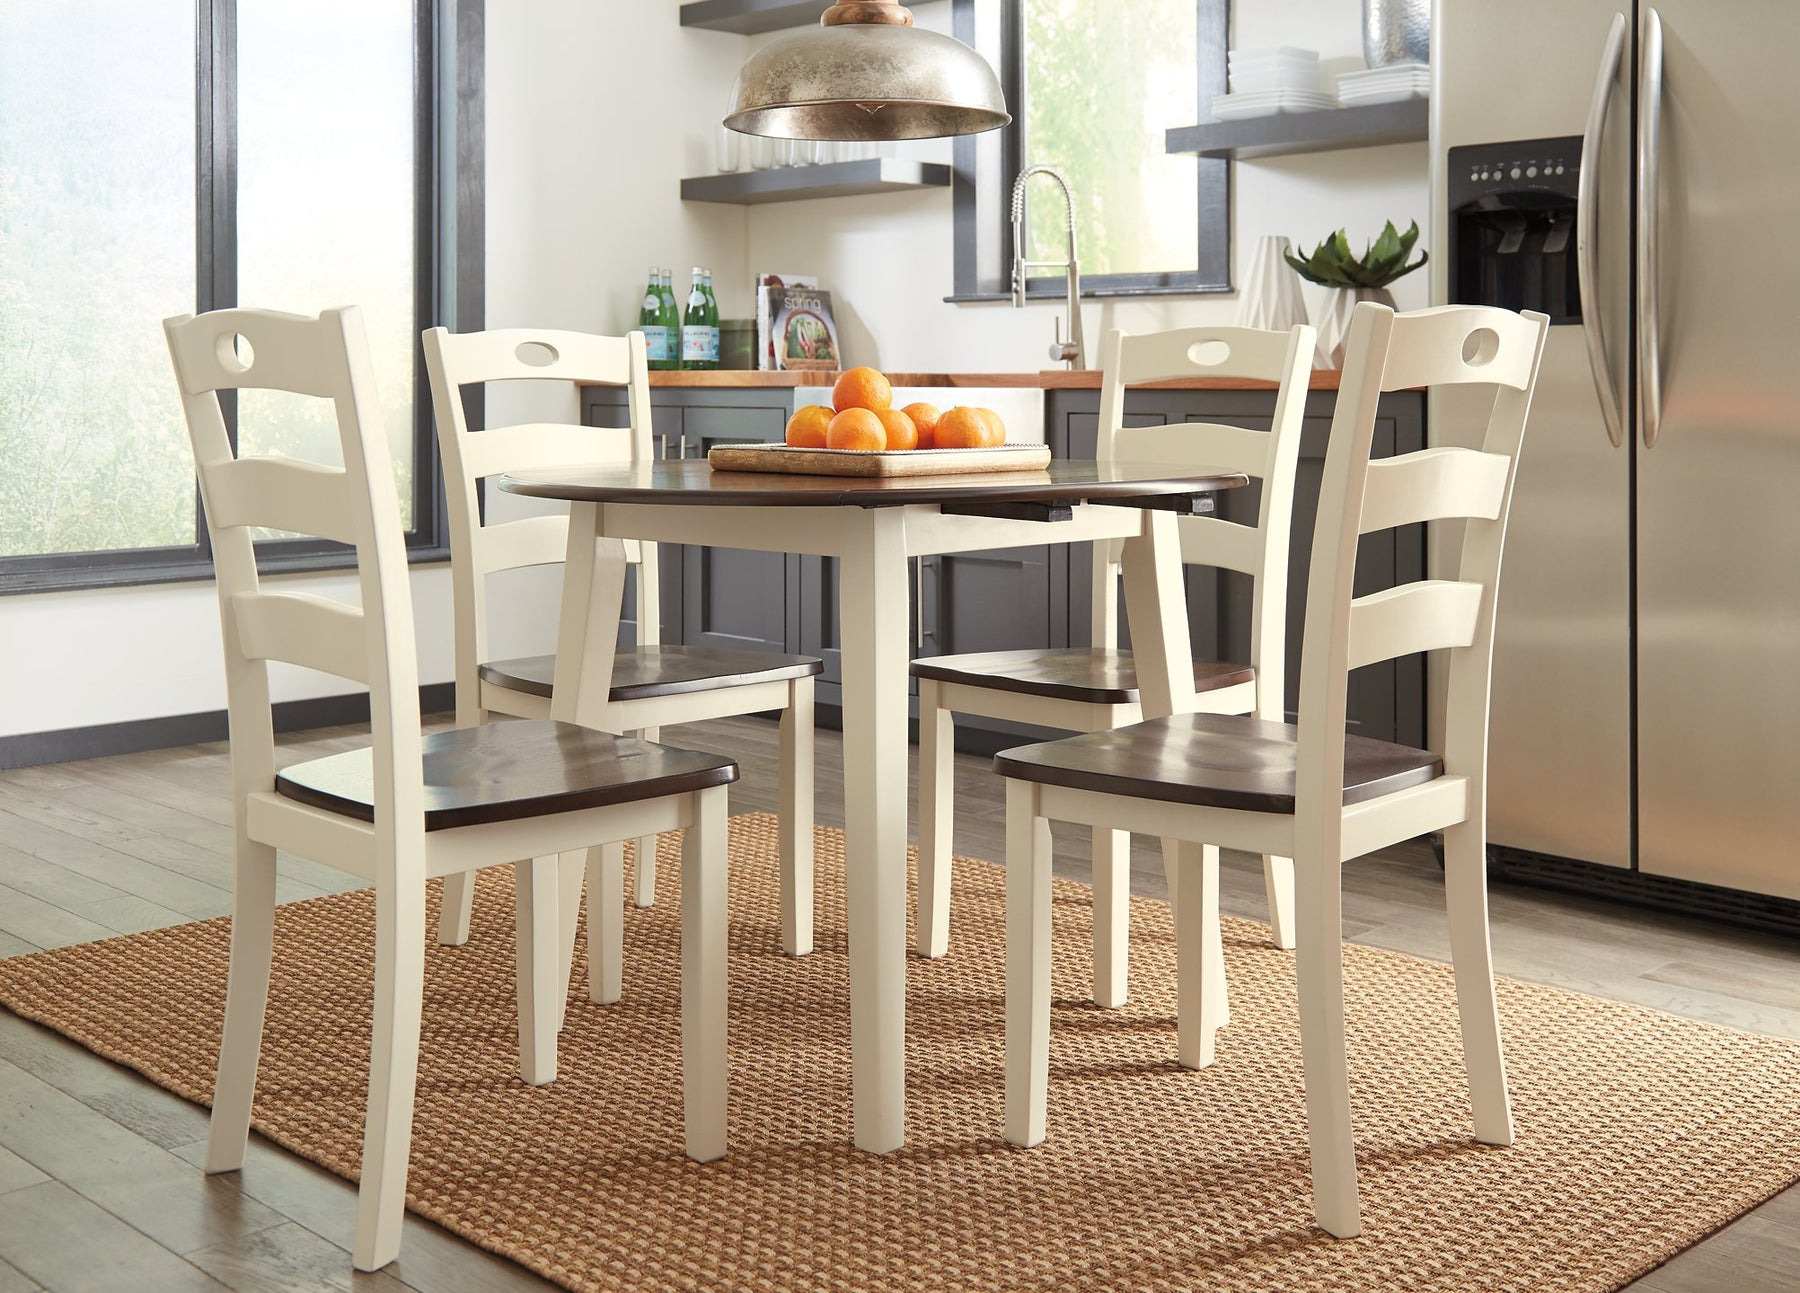 Woodanville Dining Chair - Half Price Furniture